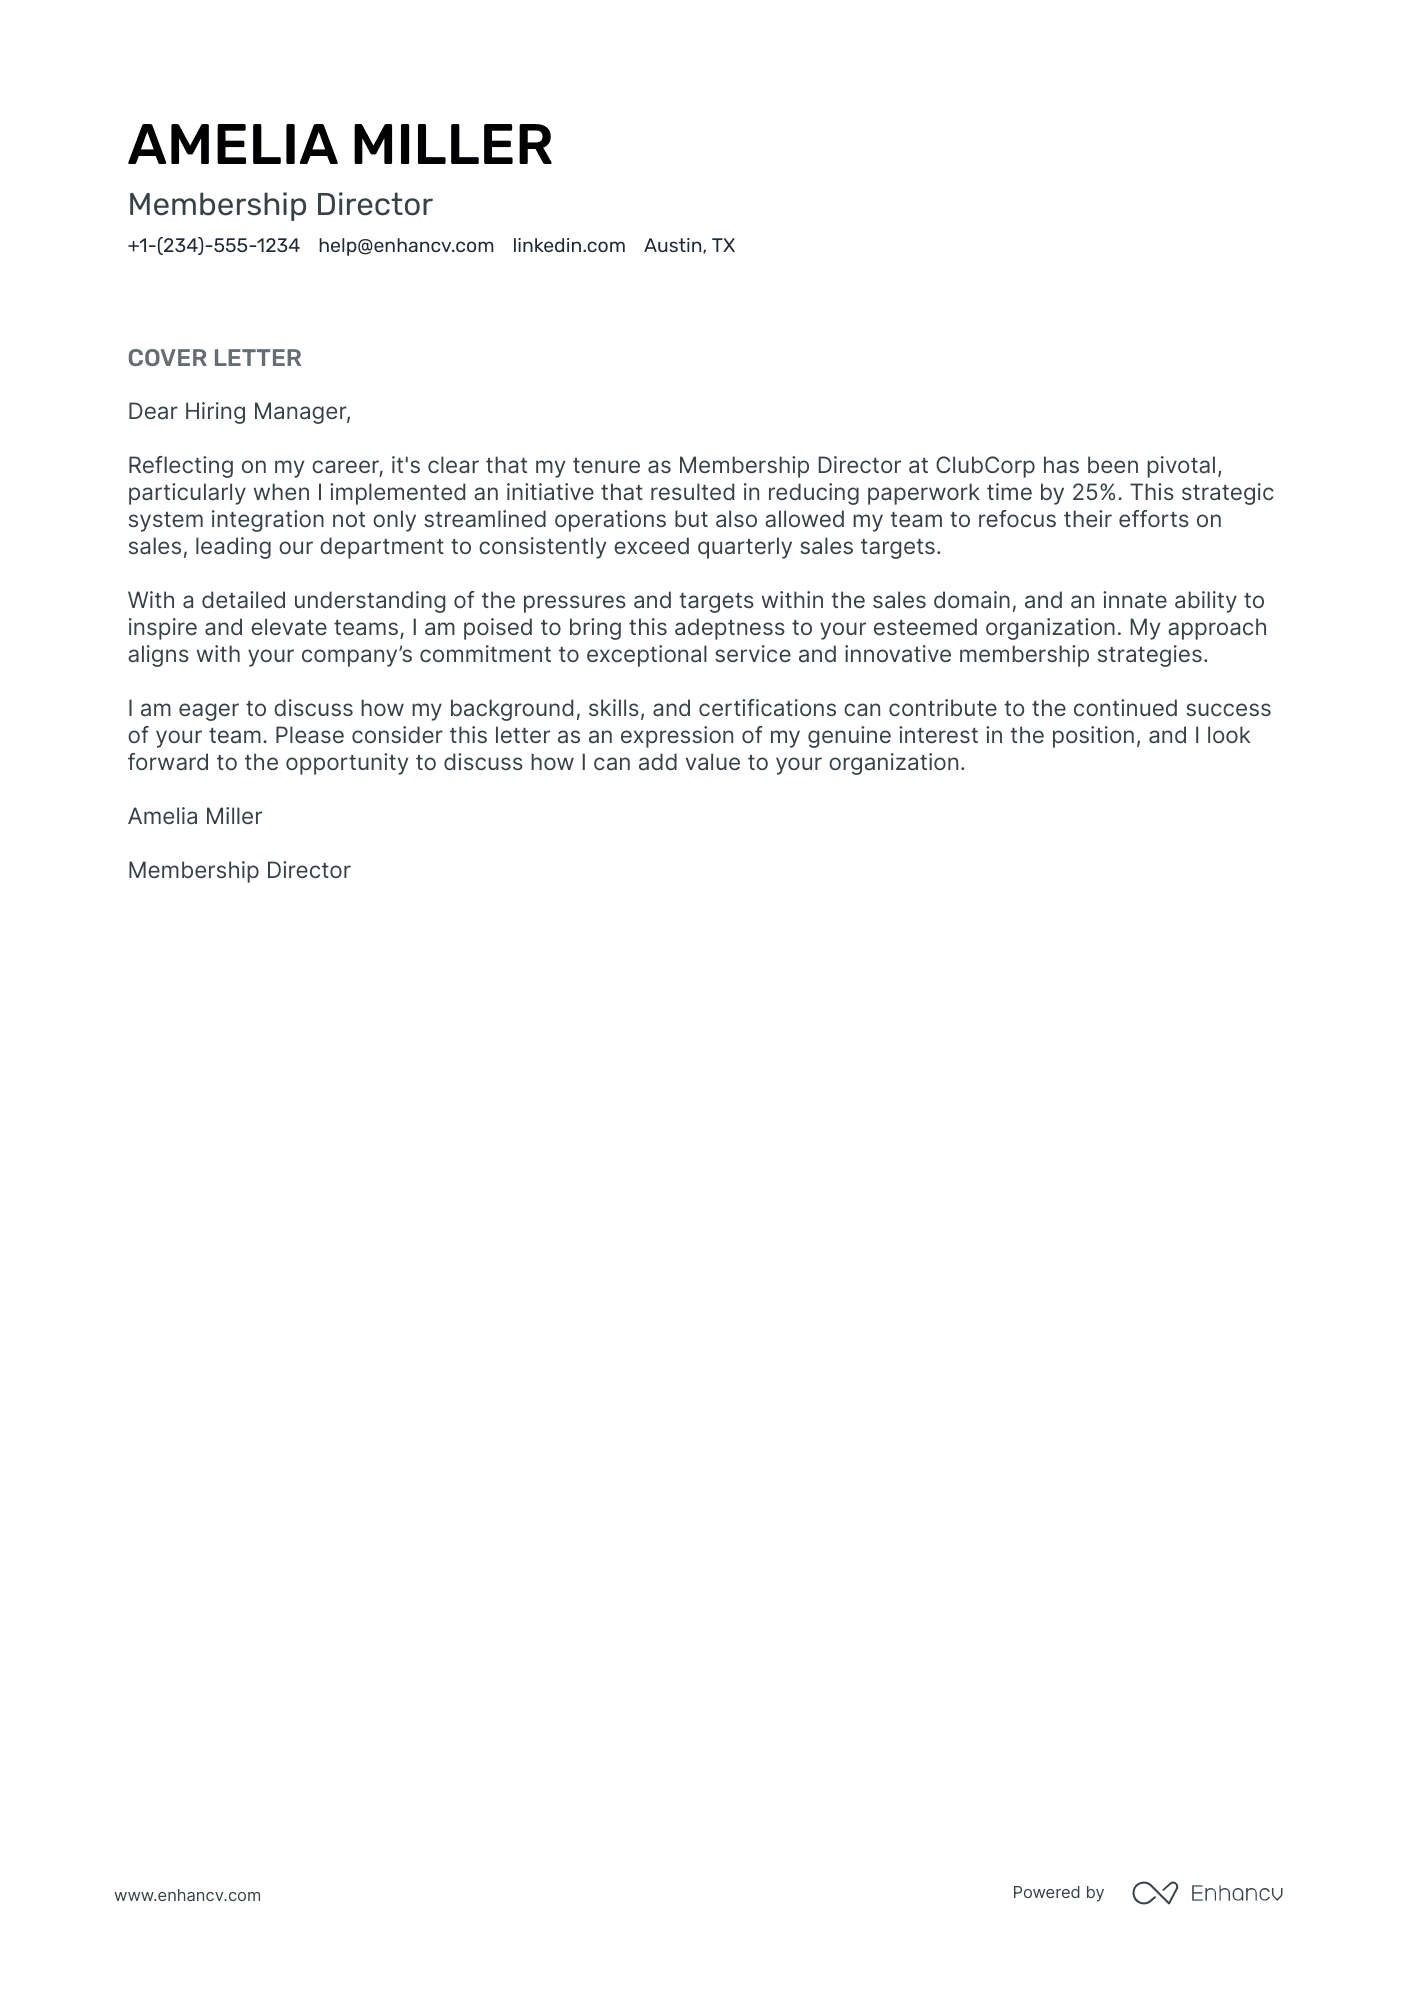 cover letter for management assistant